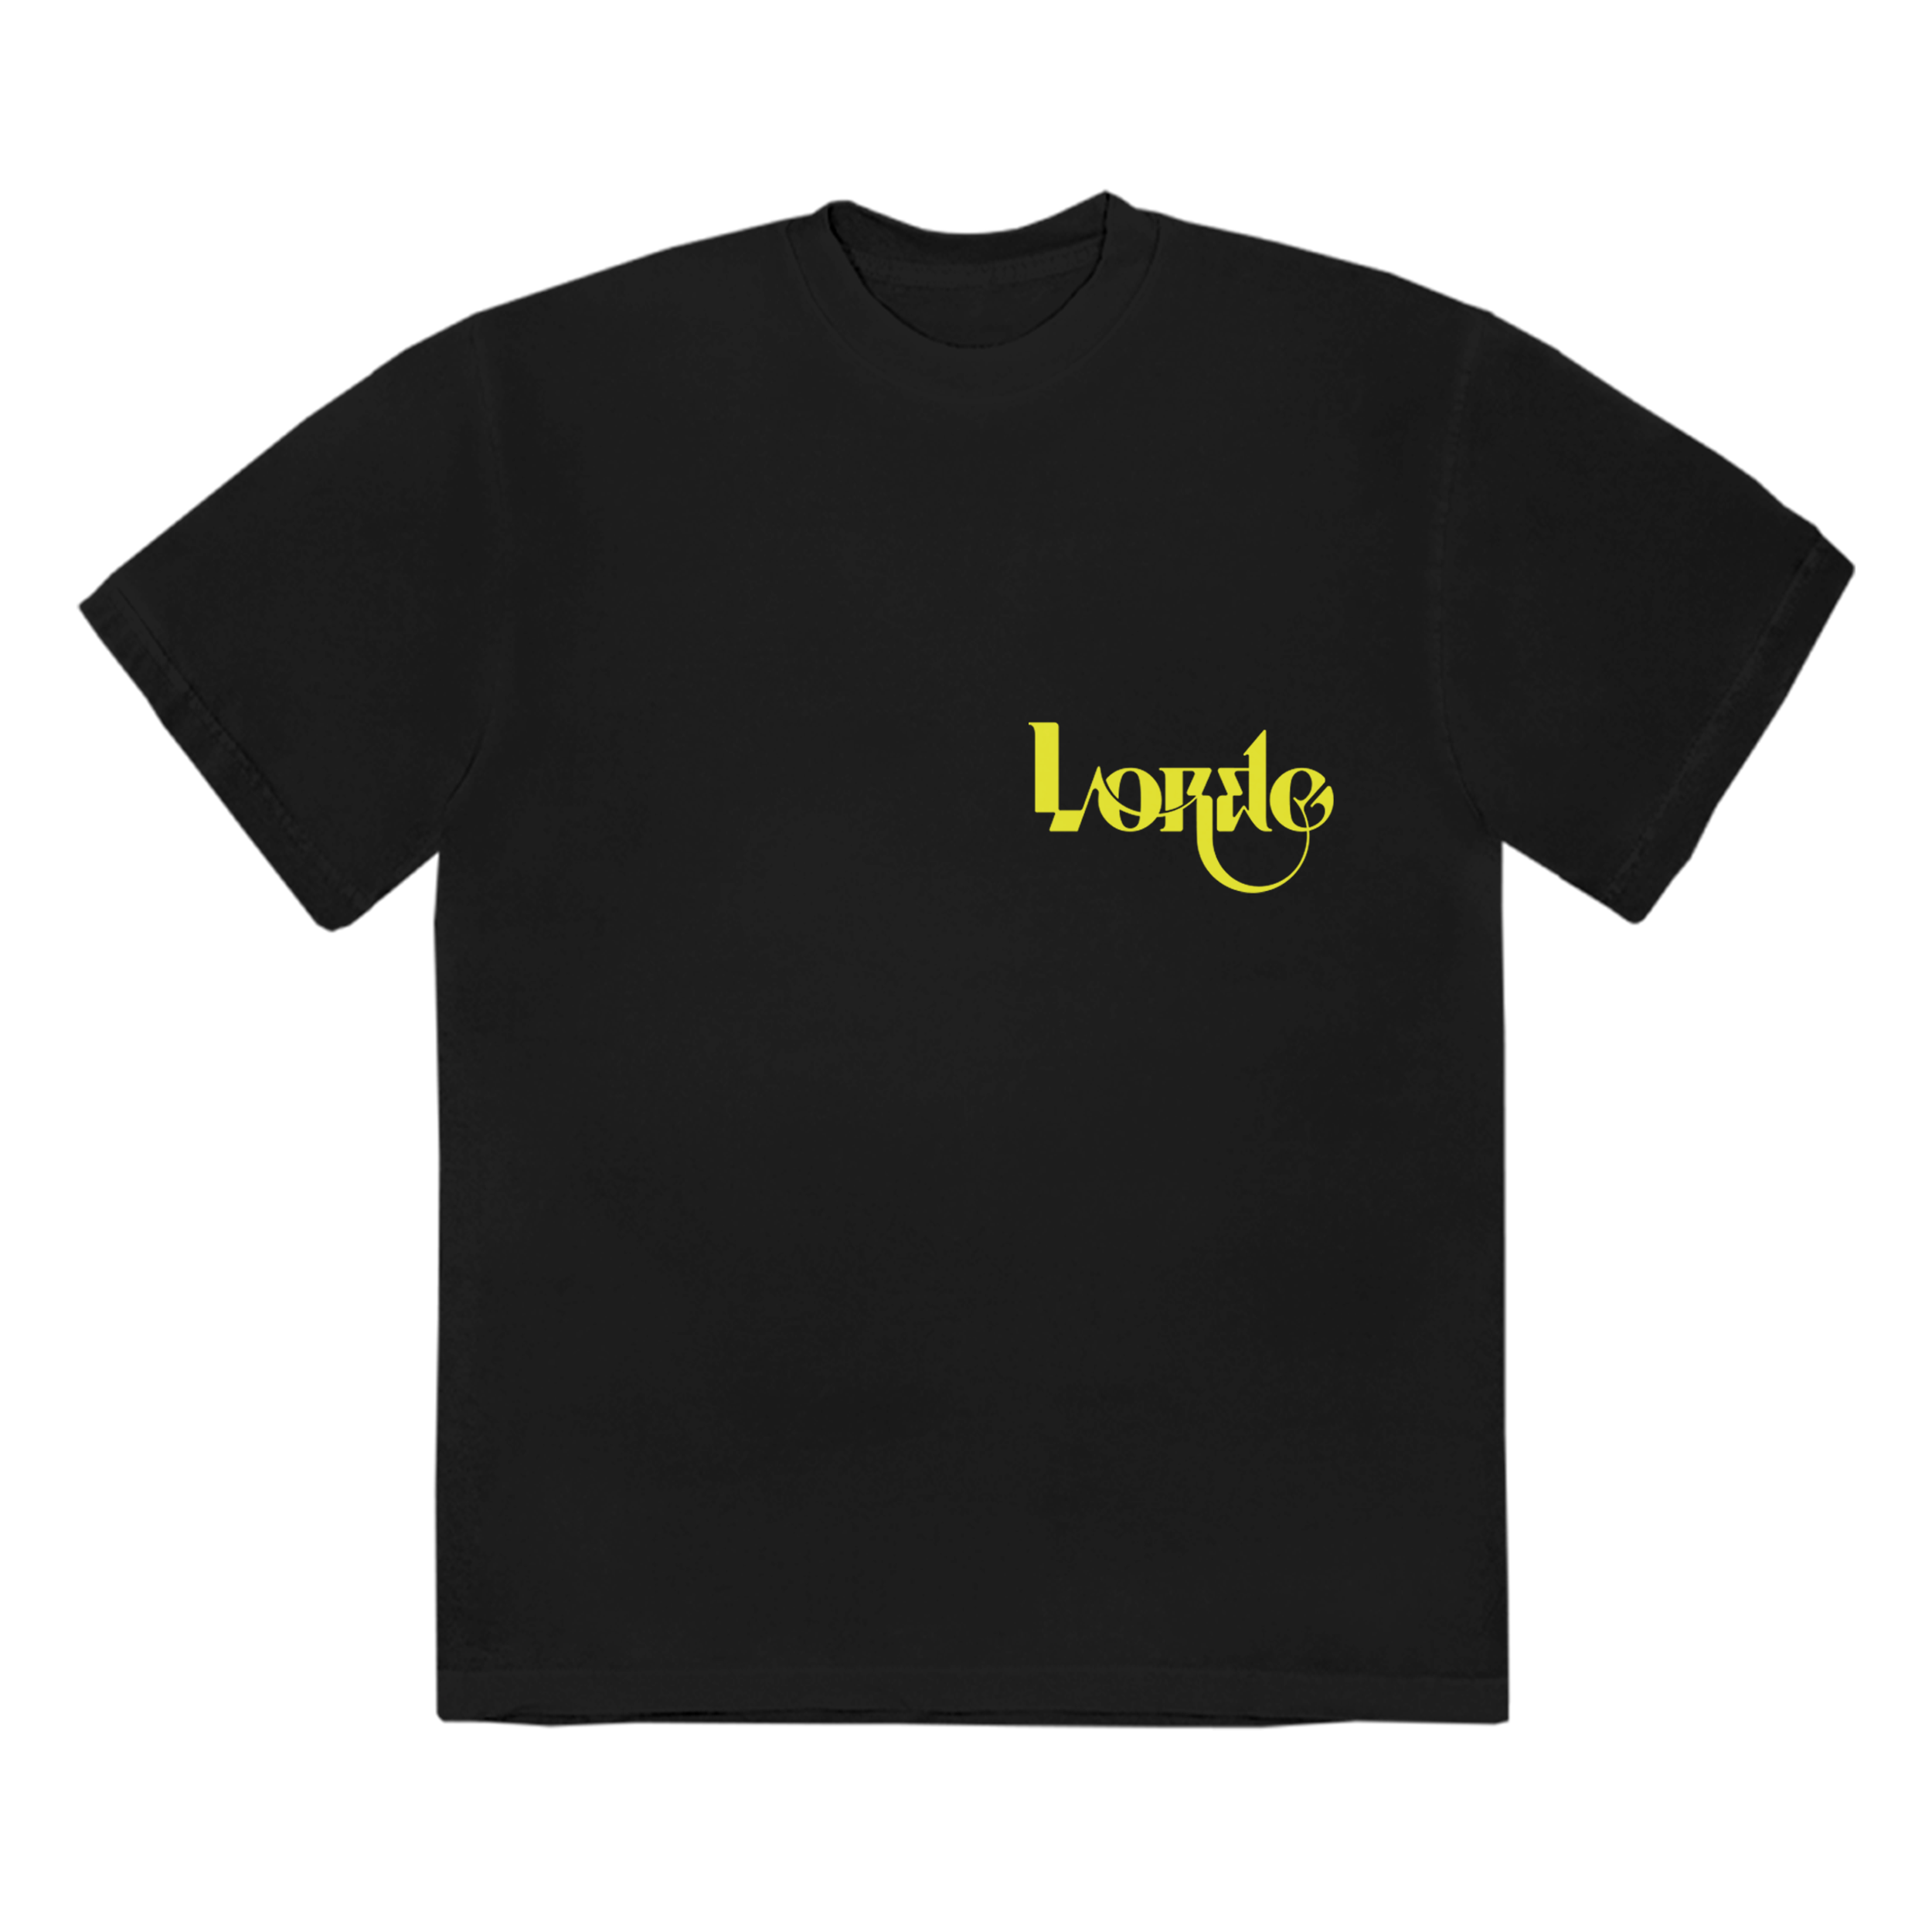 Black t-shirt with screenprinted yellow Lorde logo